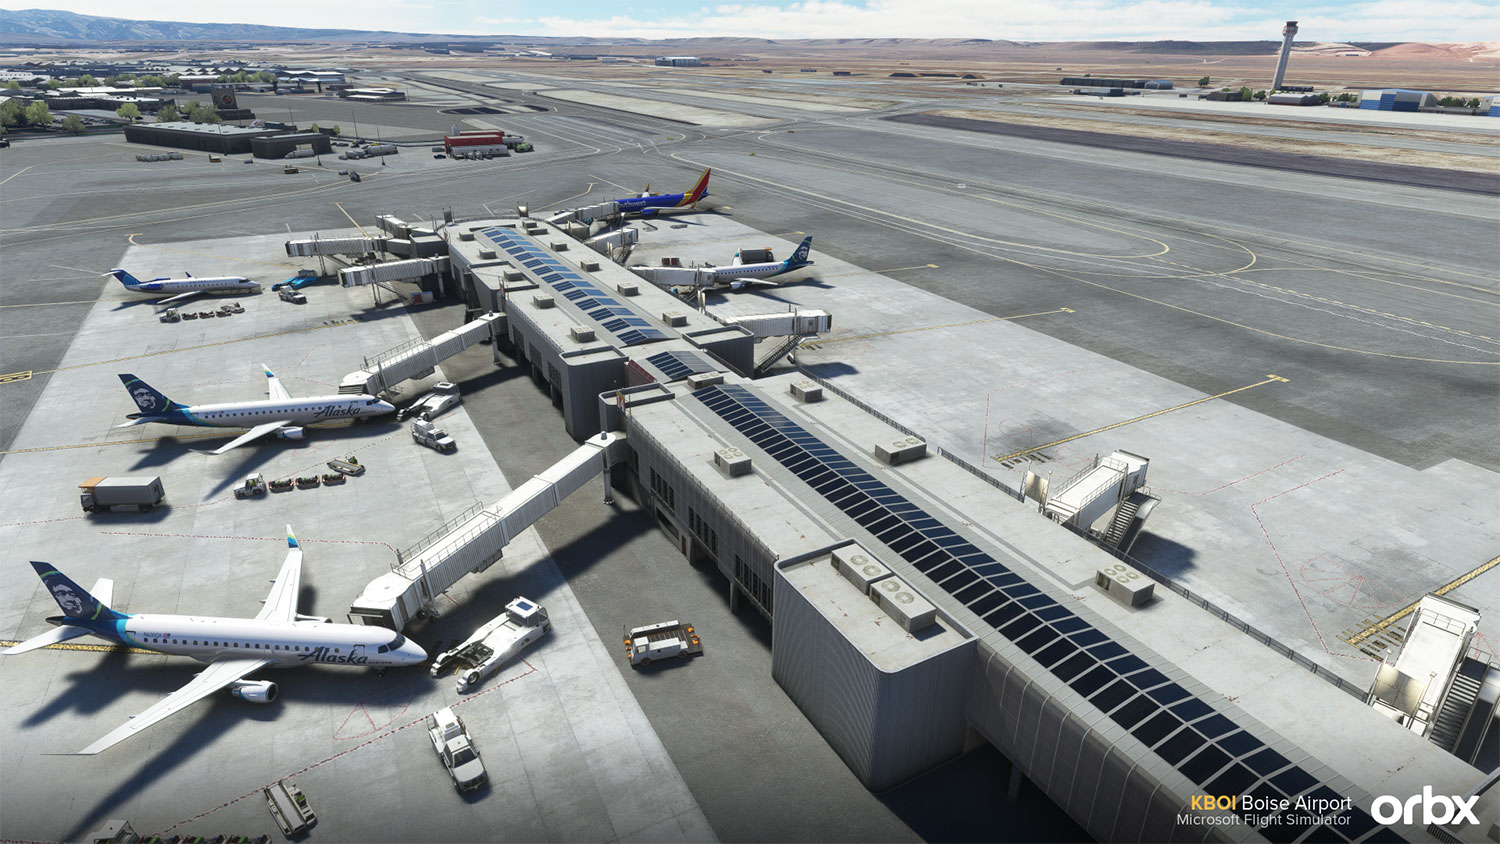 Orbx - KBOI Boise Airport MSFS